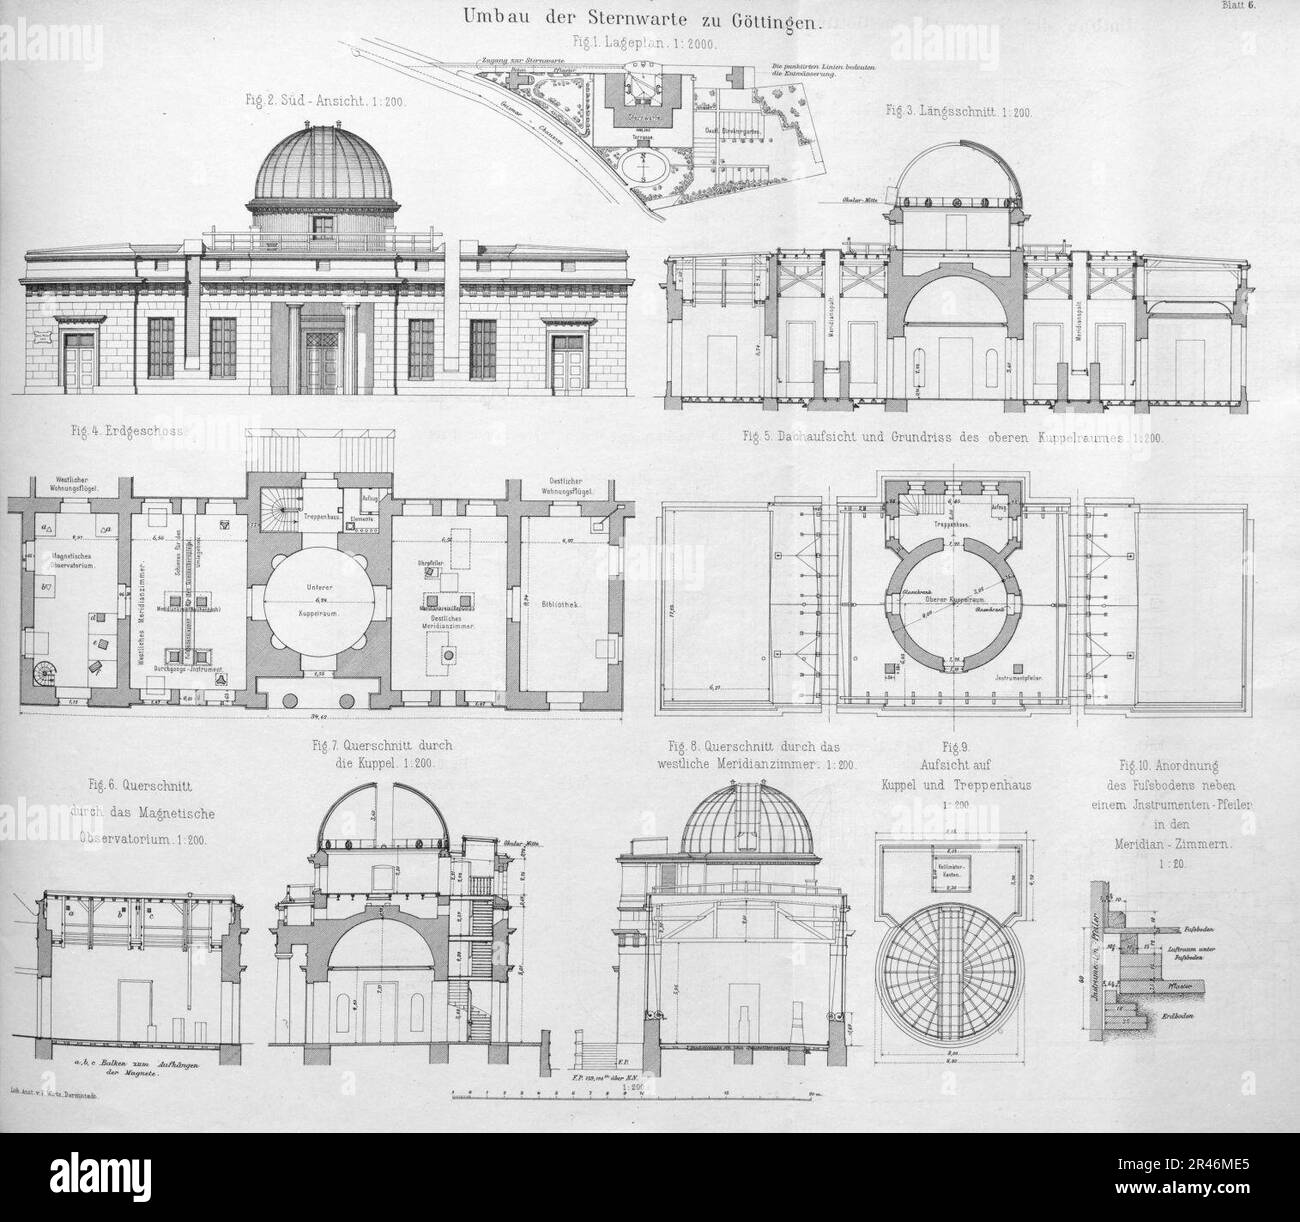 Umbau der Göttinger Sternwarte, Pläne, 1887 Stock Photo - Alamy